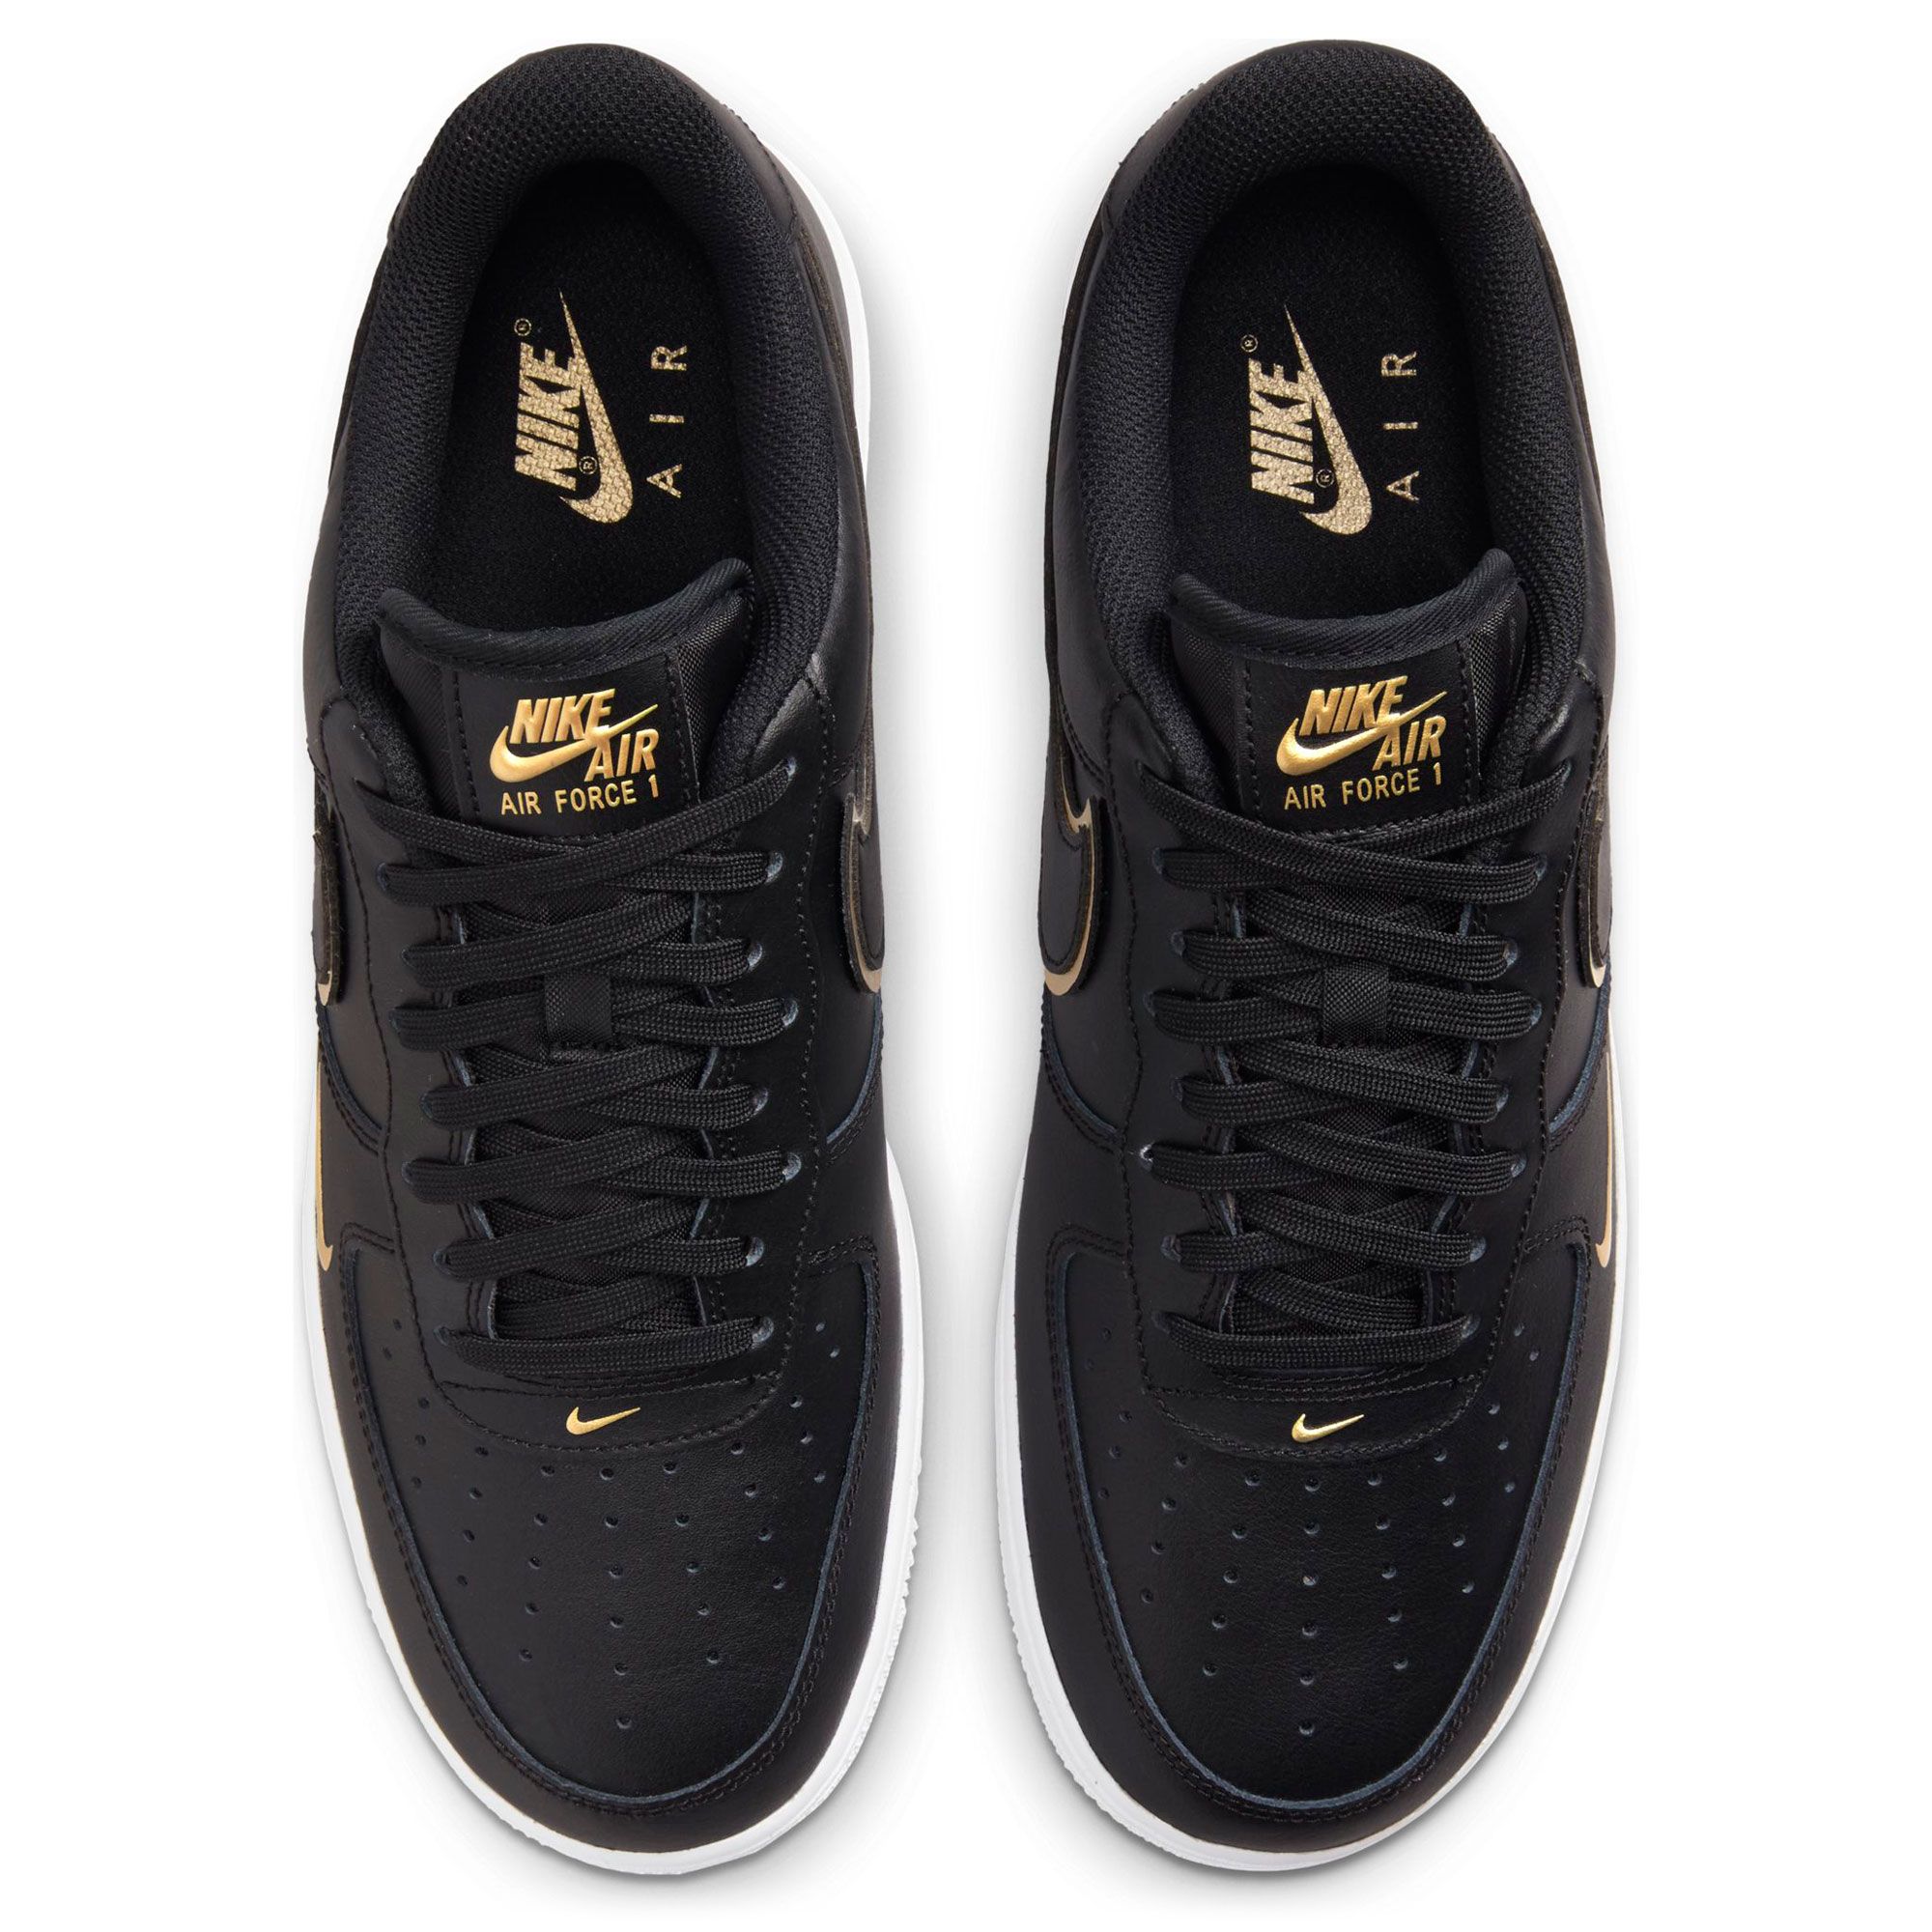 Men's Nike Air Force 1 Low Essentials White Black Gold (DA8481